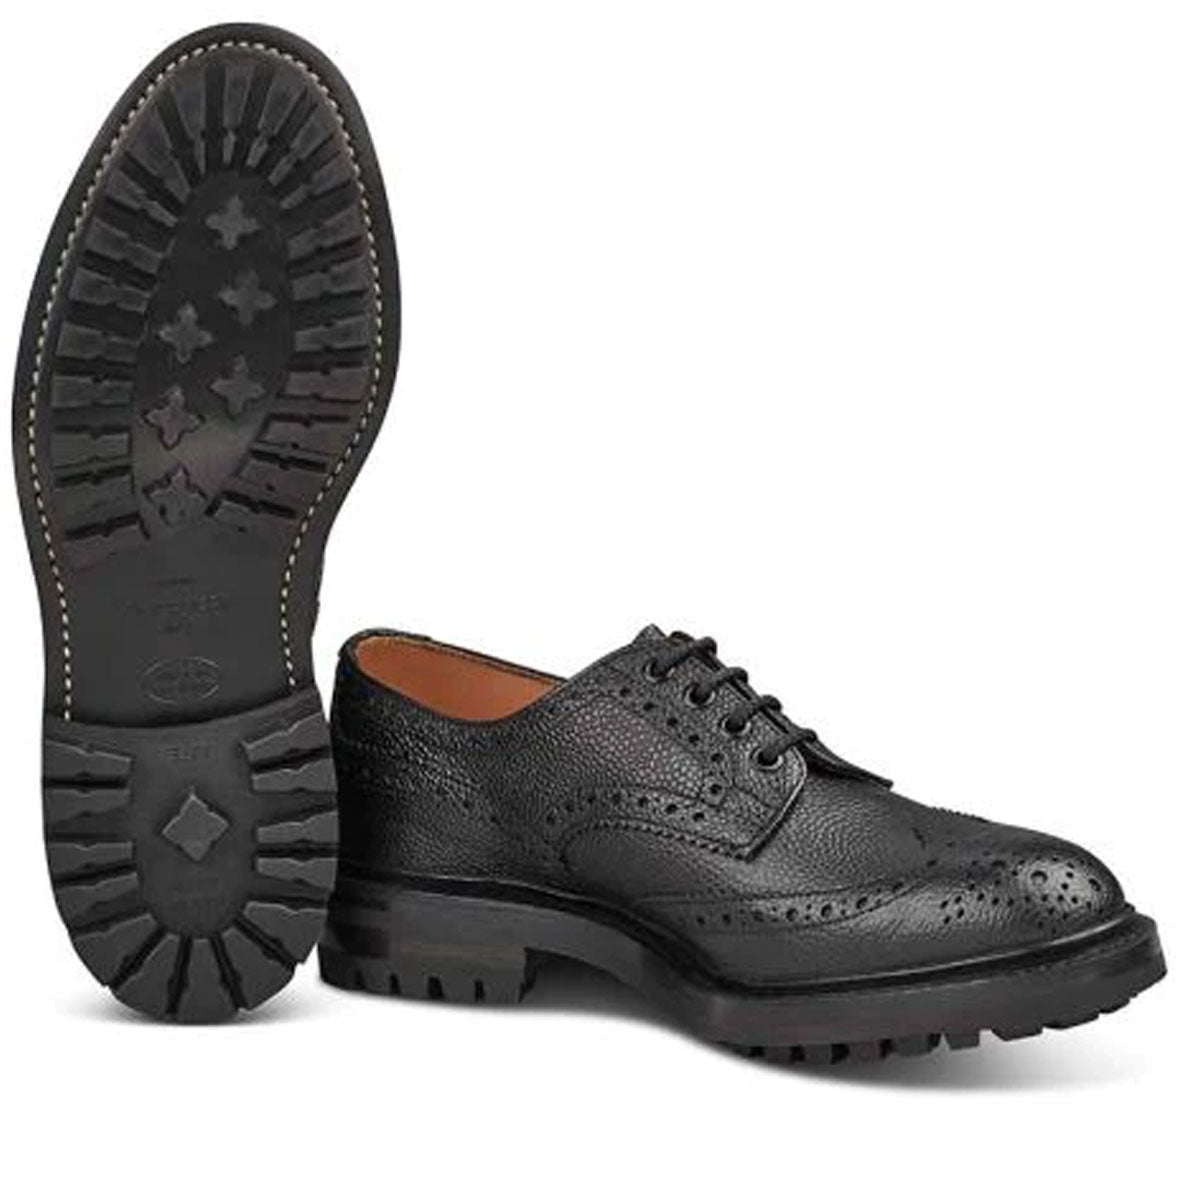 TRICKER'S Ilkley Shoes - Mens - Black Scotch Grain